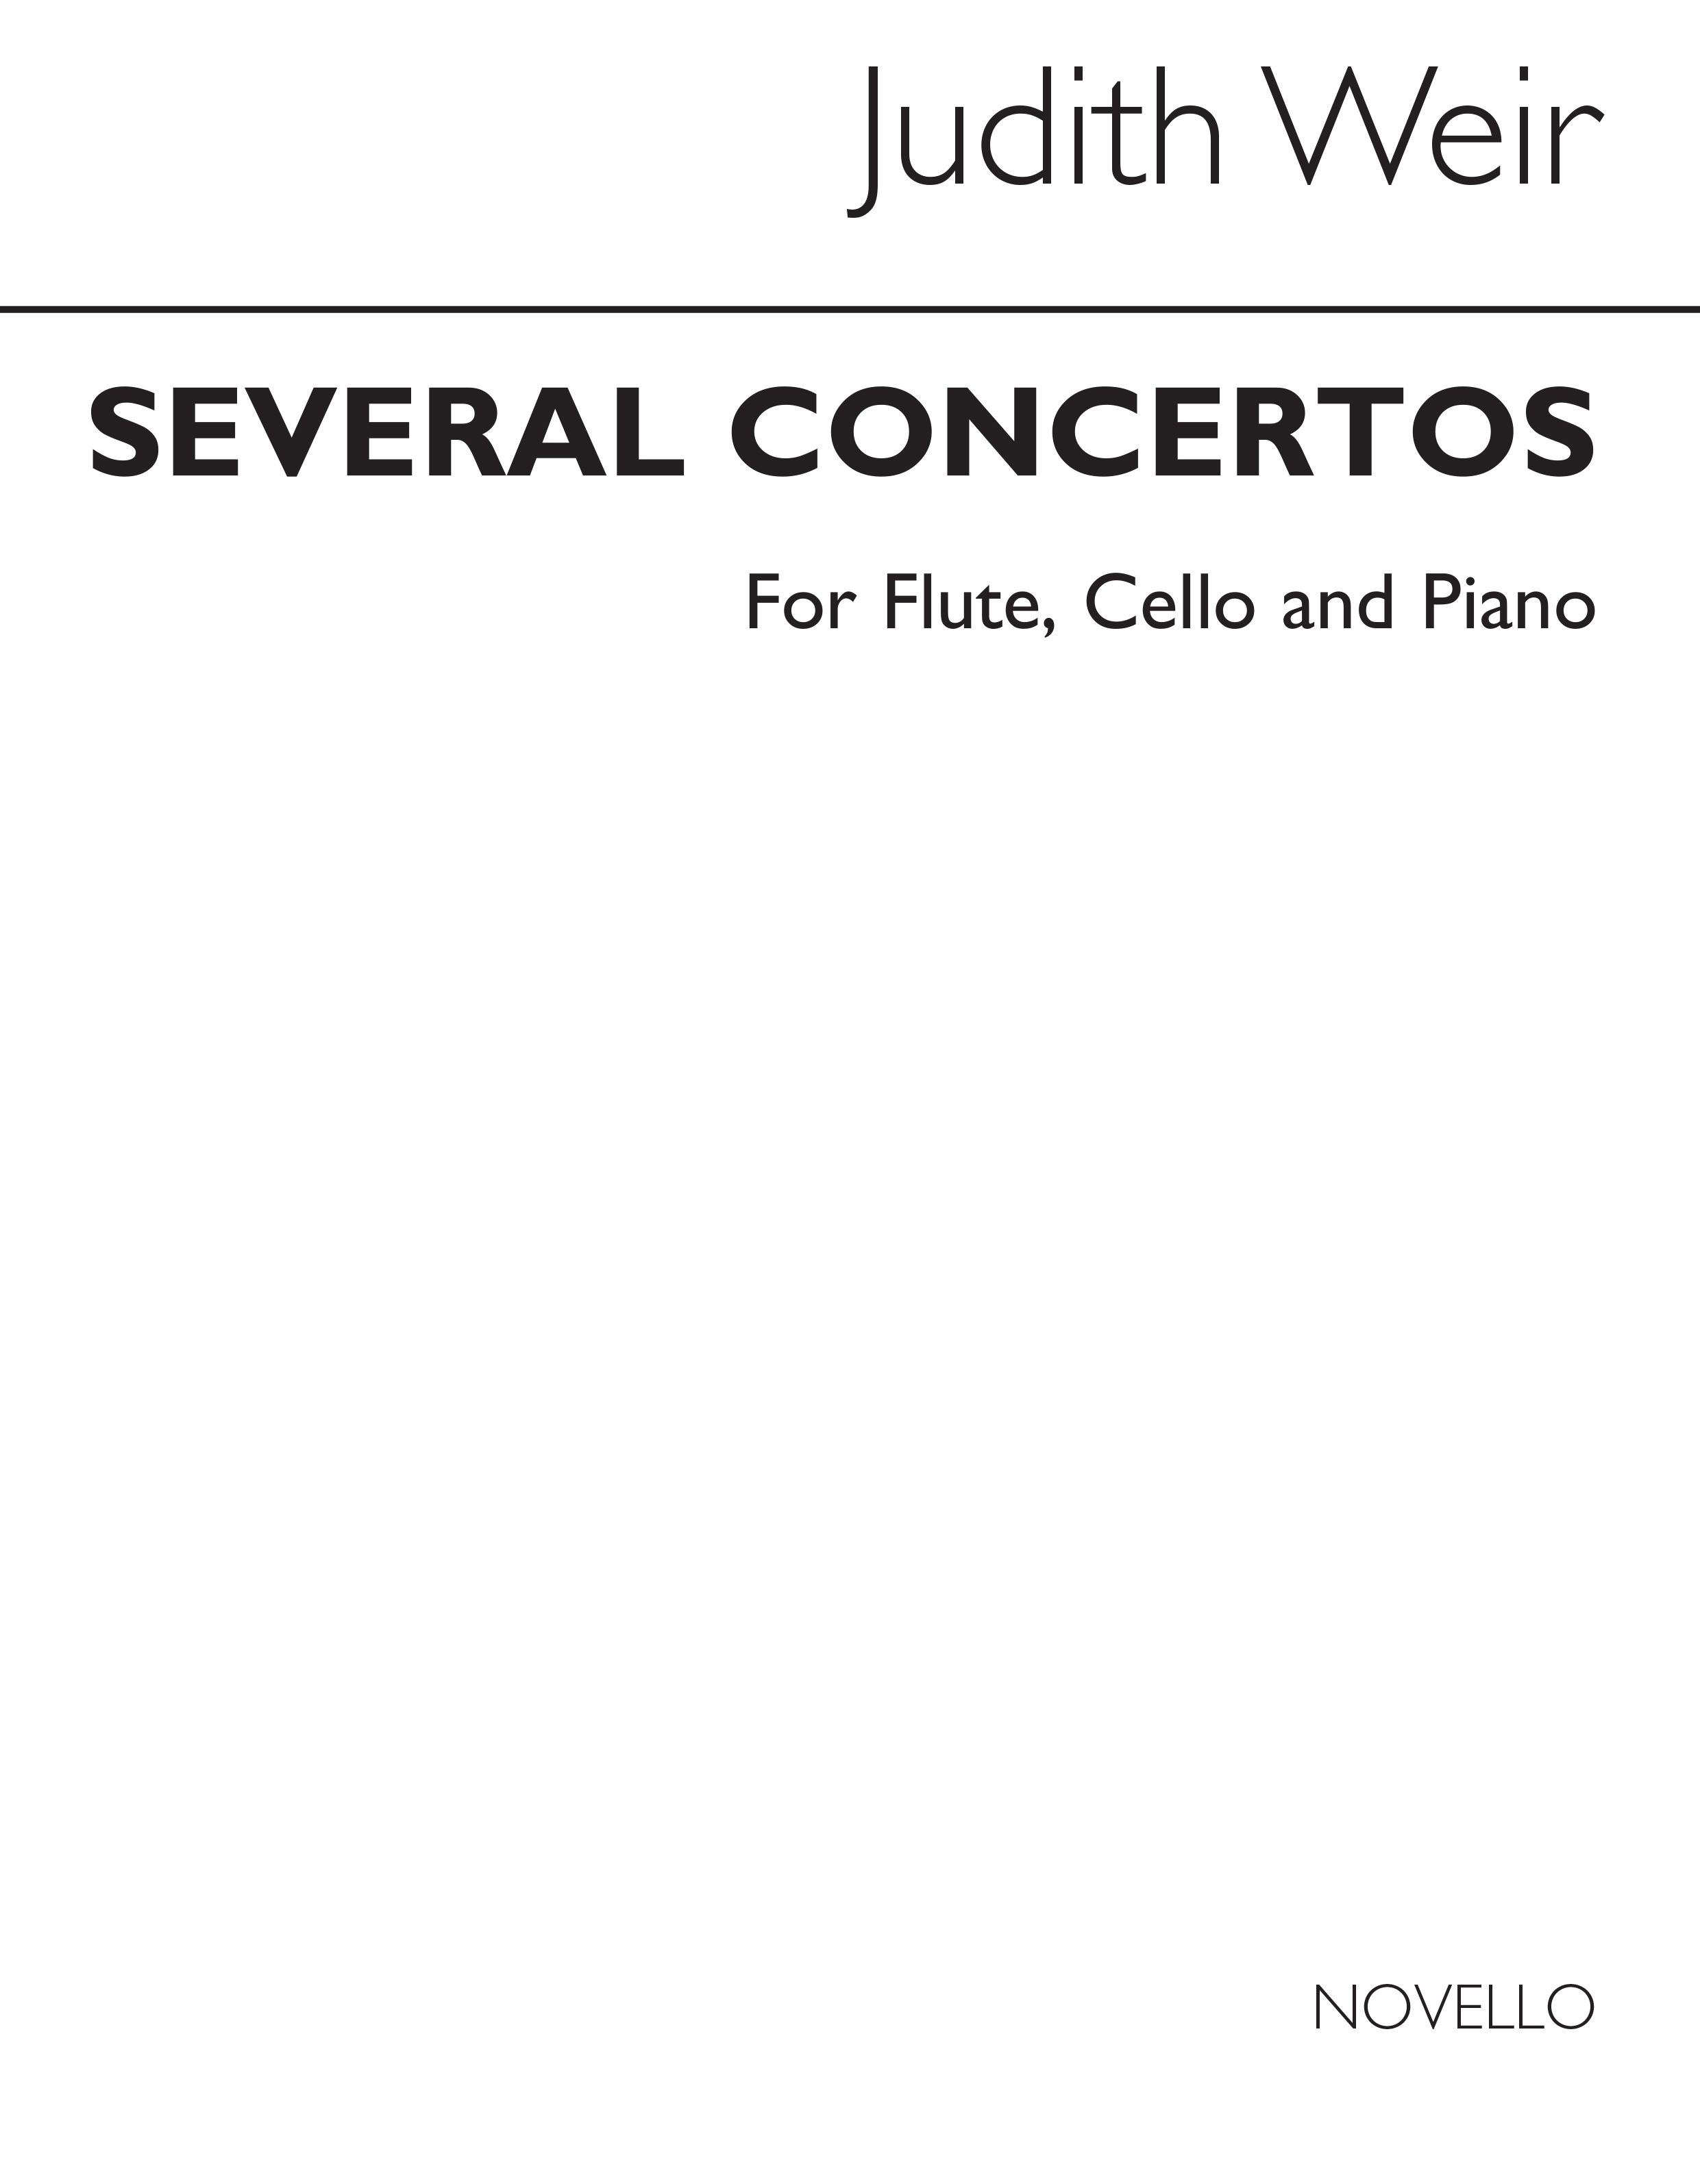 Judith Weir: Several Concertos For Flute, Cello and Piano